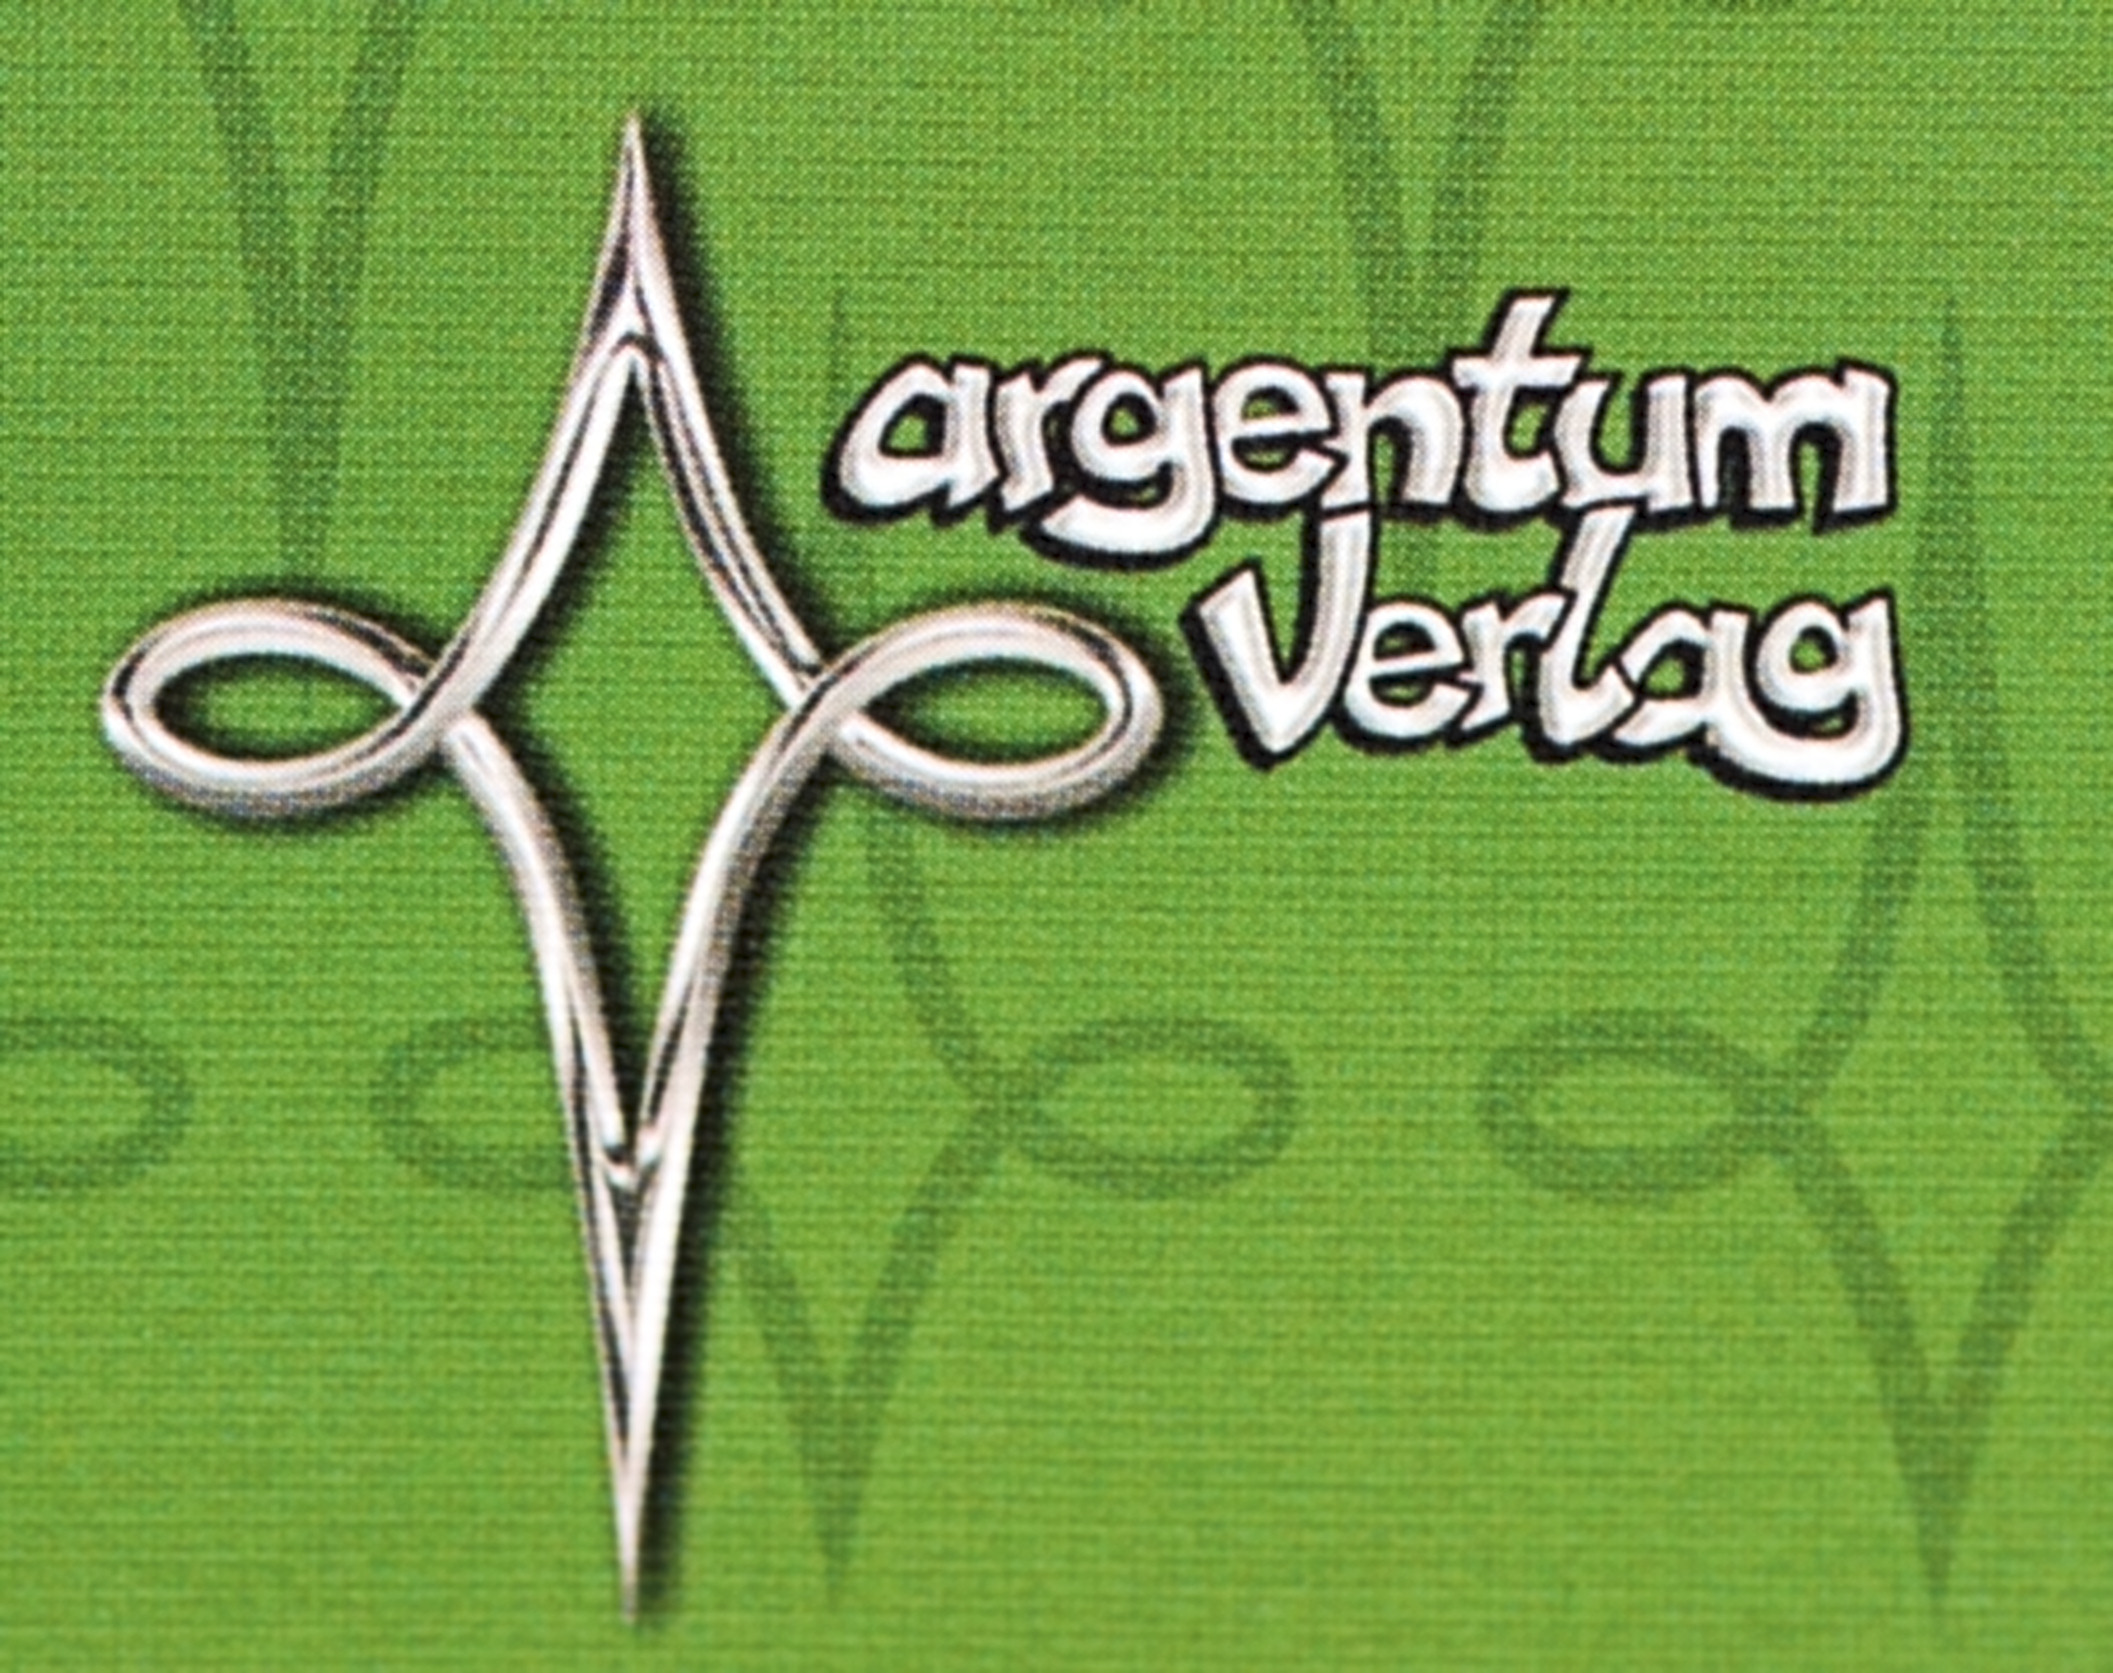 Wind River - Argentum Verlag Logo